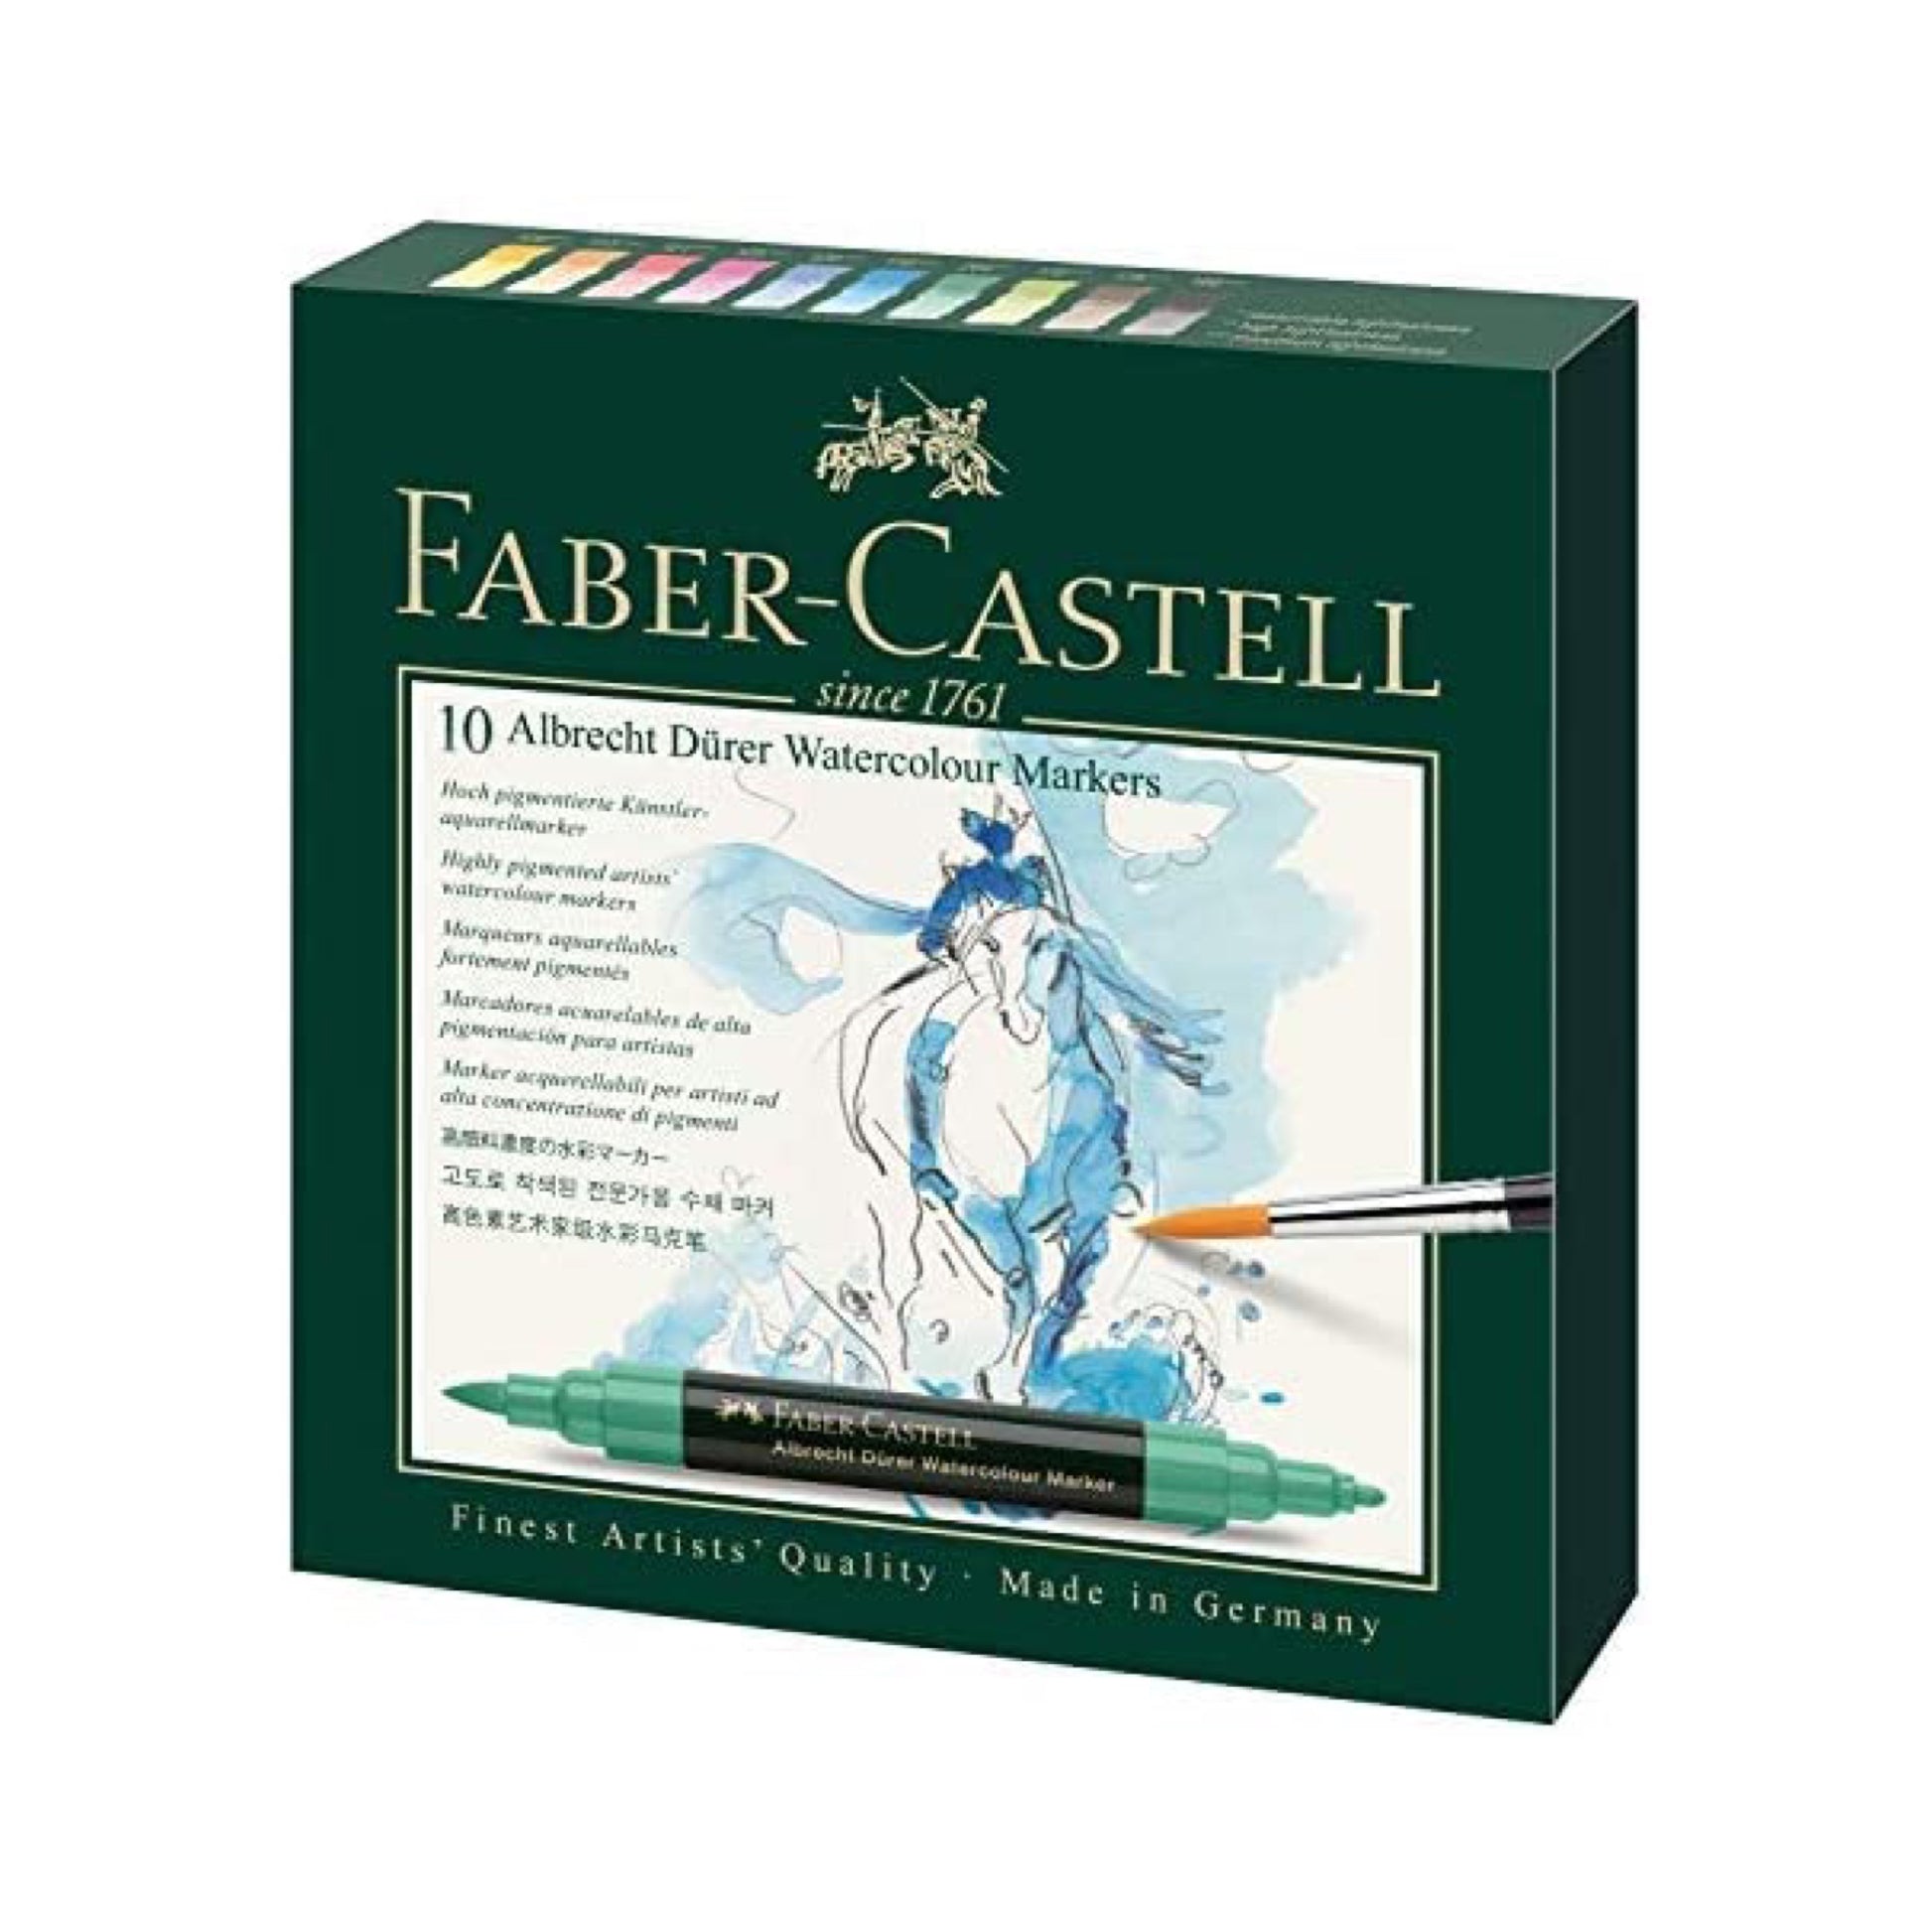 Faber Castell Albrecht Dürer Watercolor Markers Gift Box of 10 ||   مجموعه اقلام تلوين فيبر كاستل البرت ديورر واتركلر ماركر 10 الوان